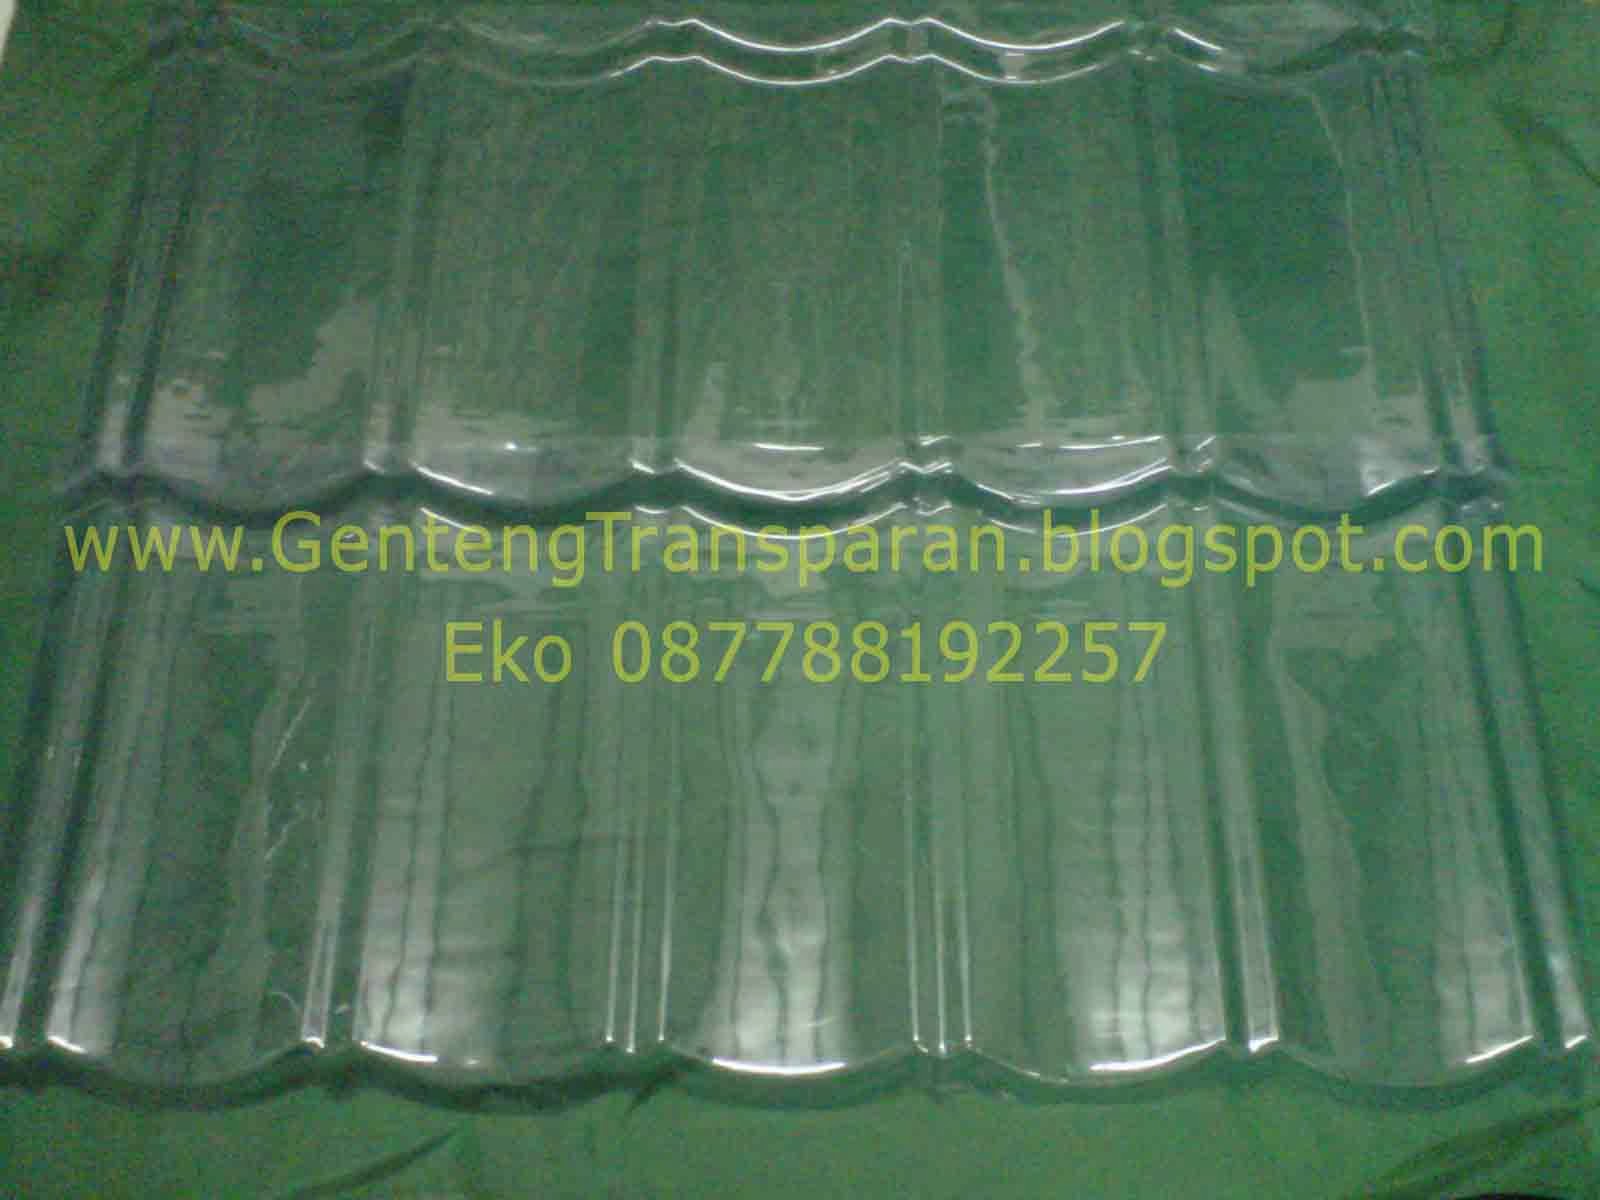  Genteng Transparan  Murah JUAL ATAP TRANSPARAN  PVC